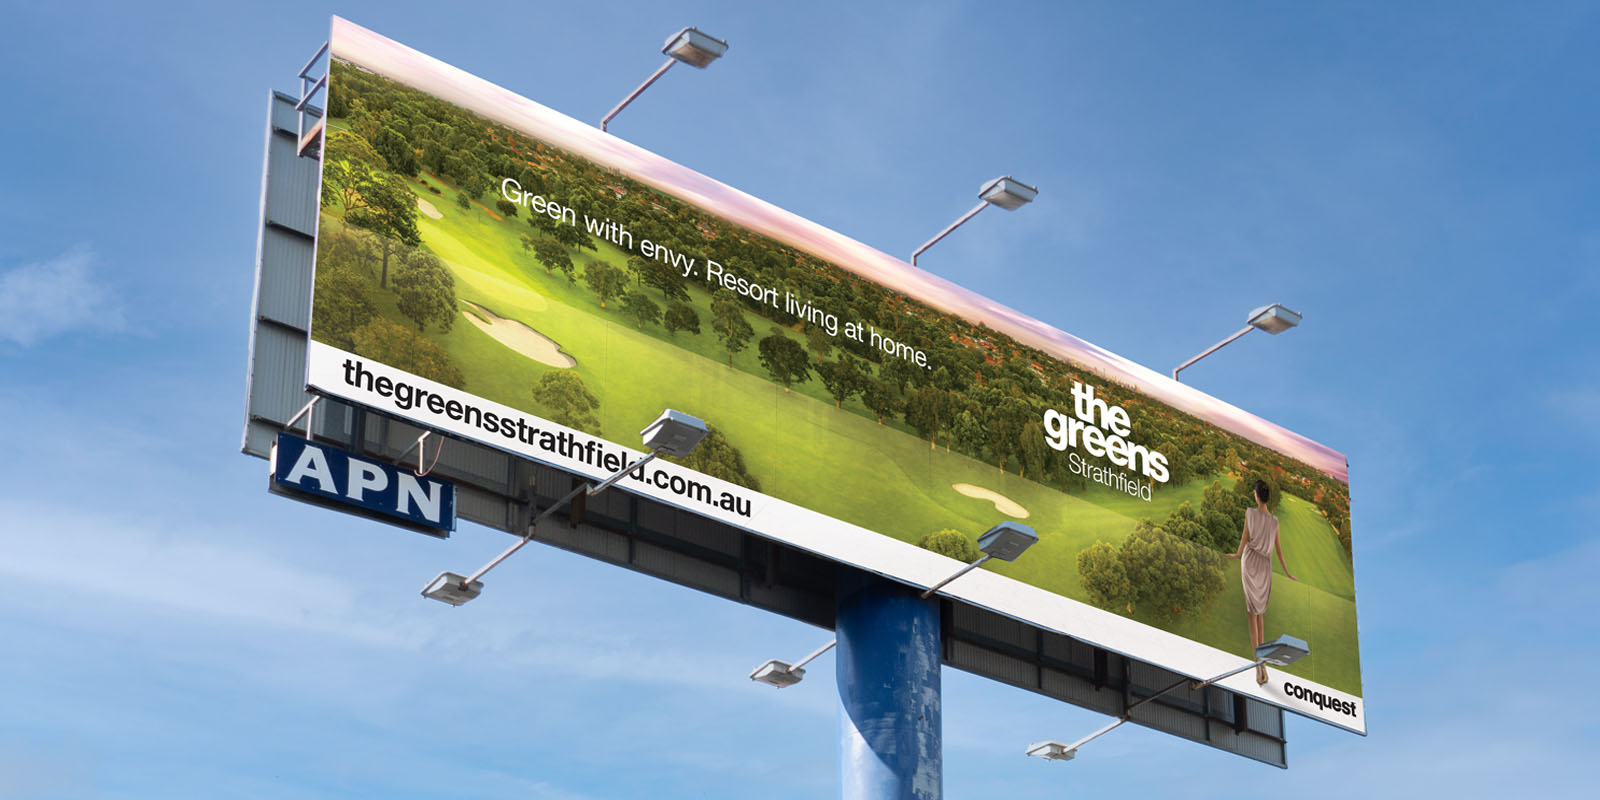 The Greens Strathfield Development. Property Marketing Signage by Allan Chan.